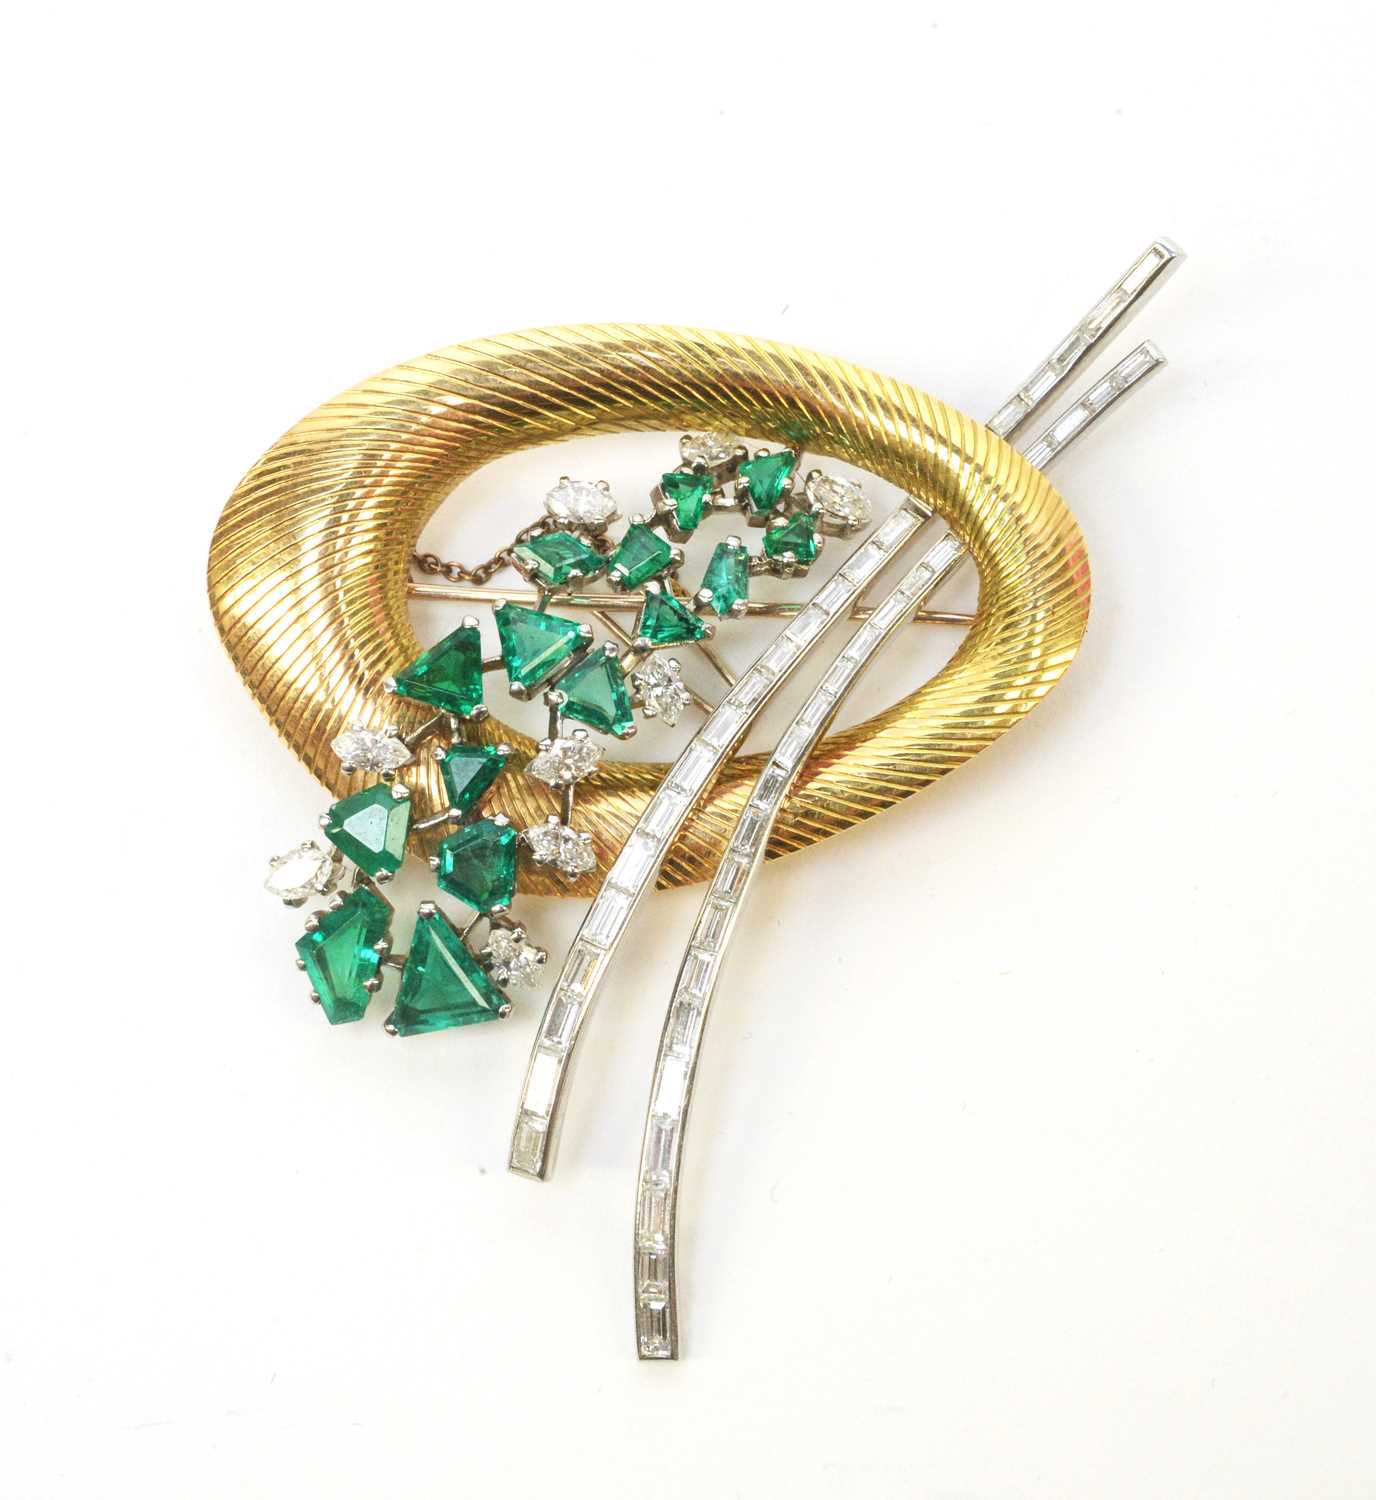 Lot 2 - An Art Deco diamond, emerald and yellow metal brooch.